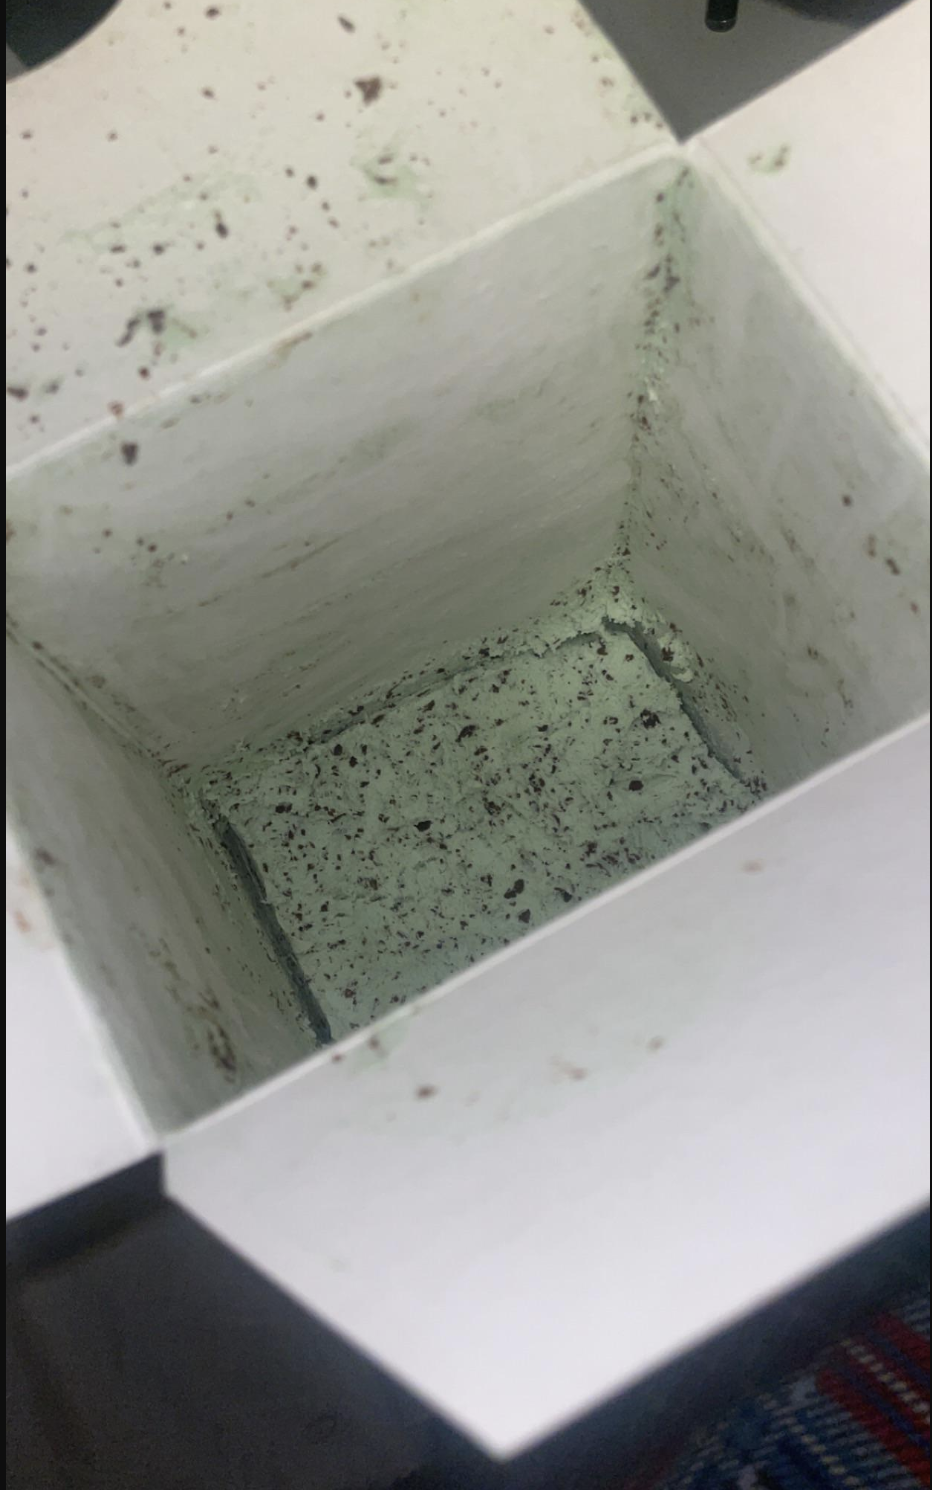 An almost empty ice cream carton